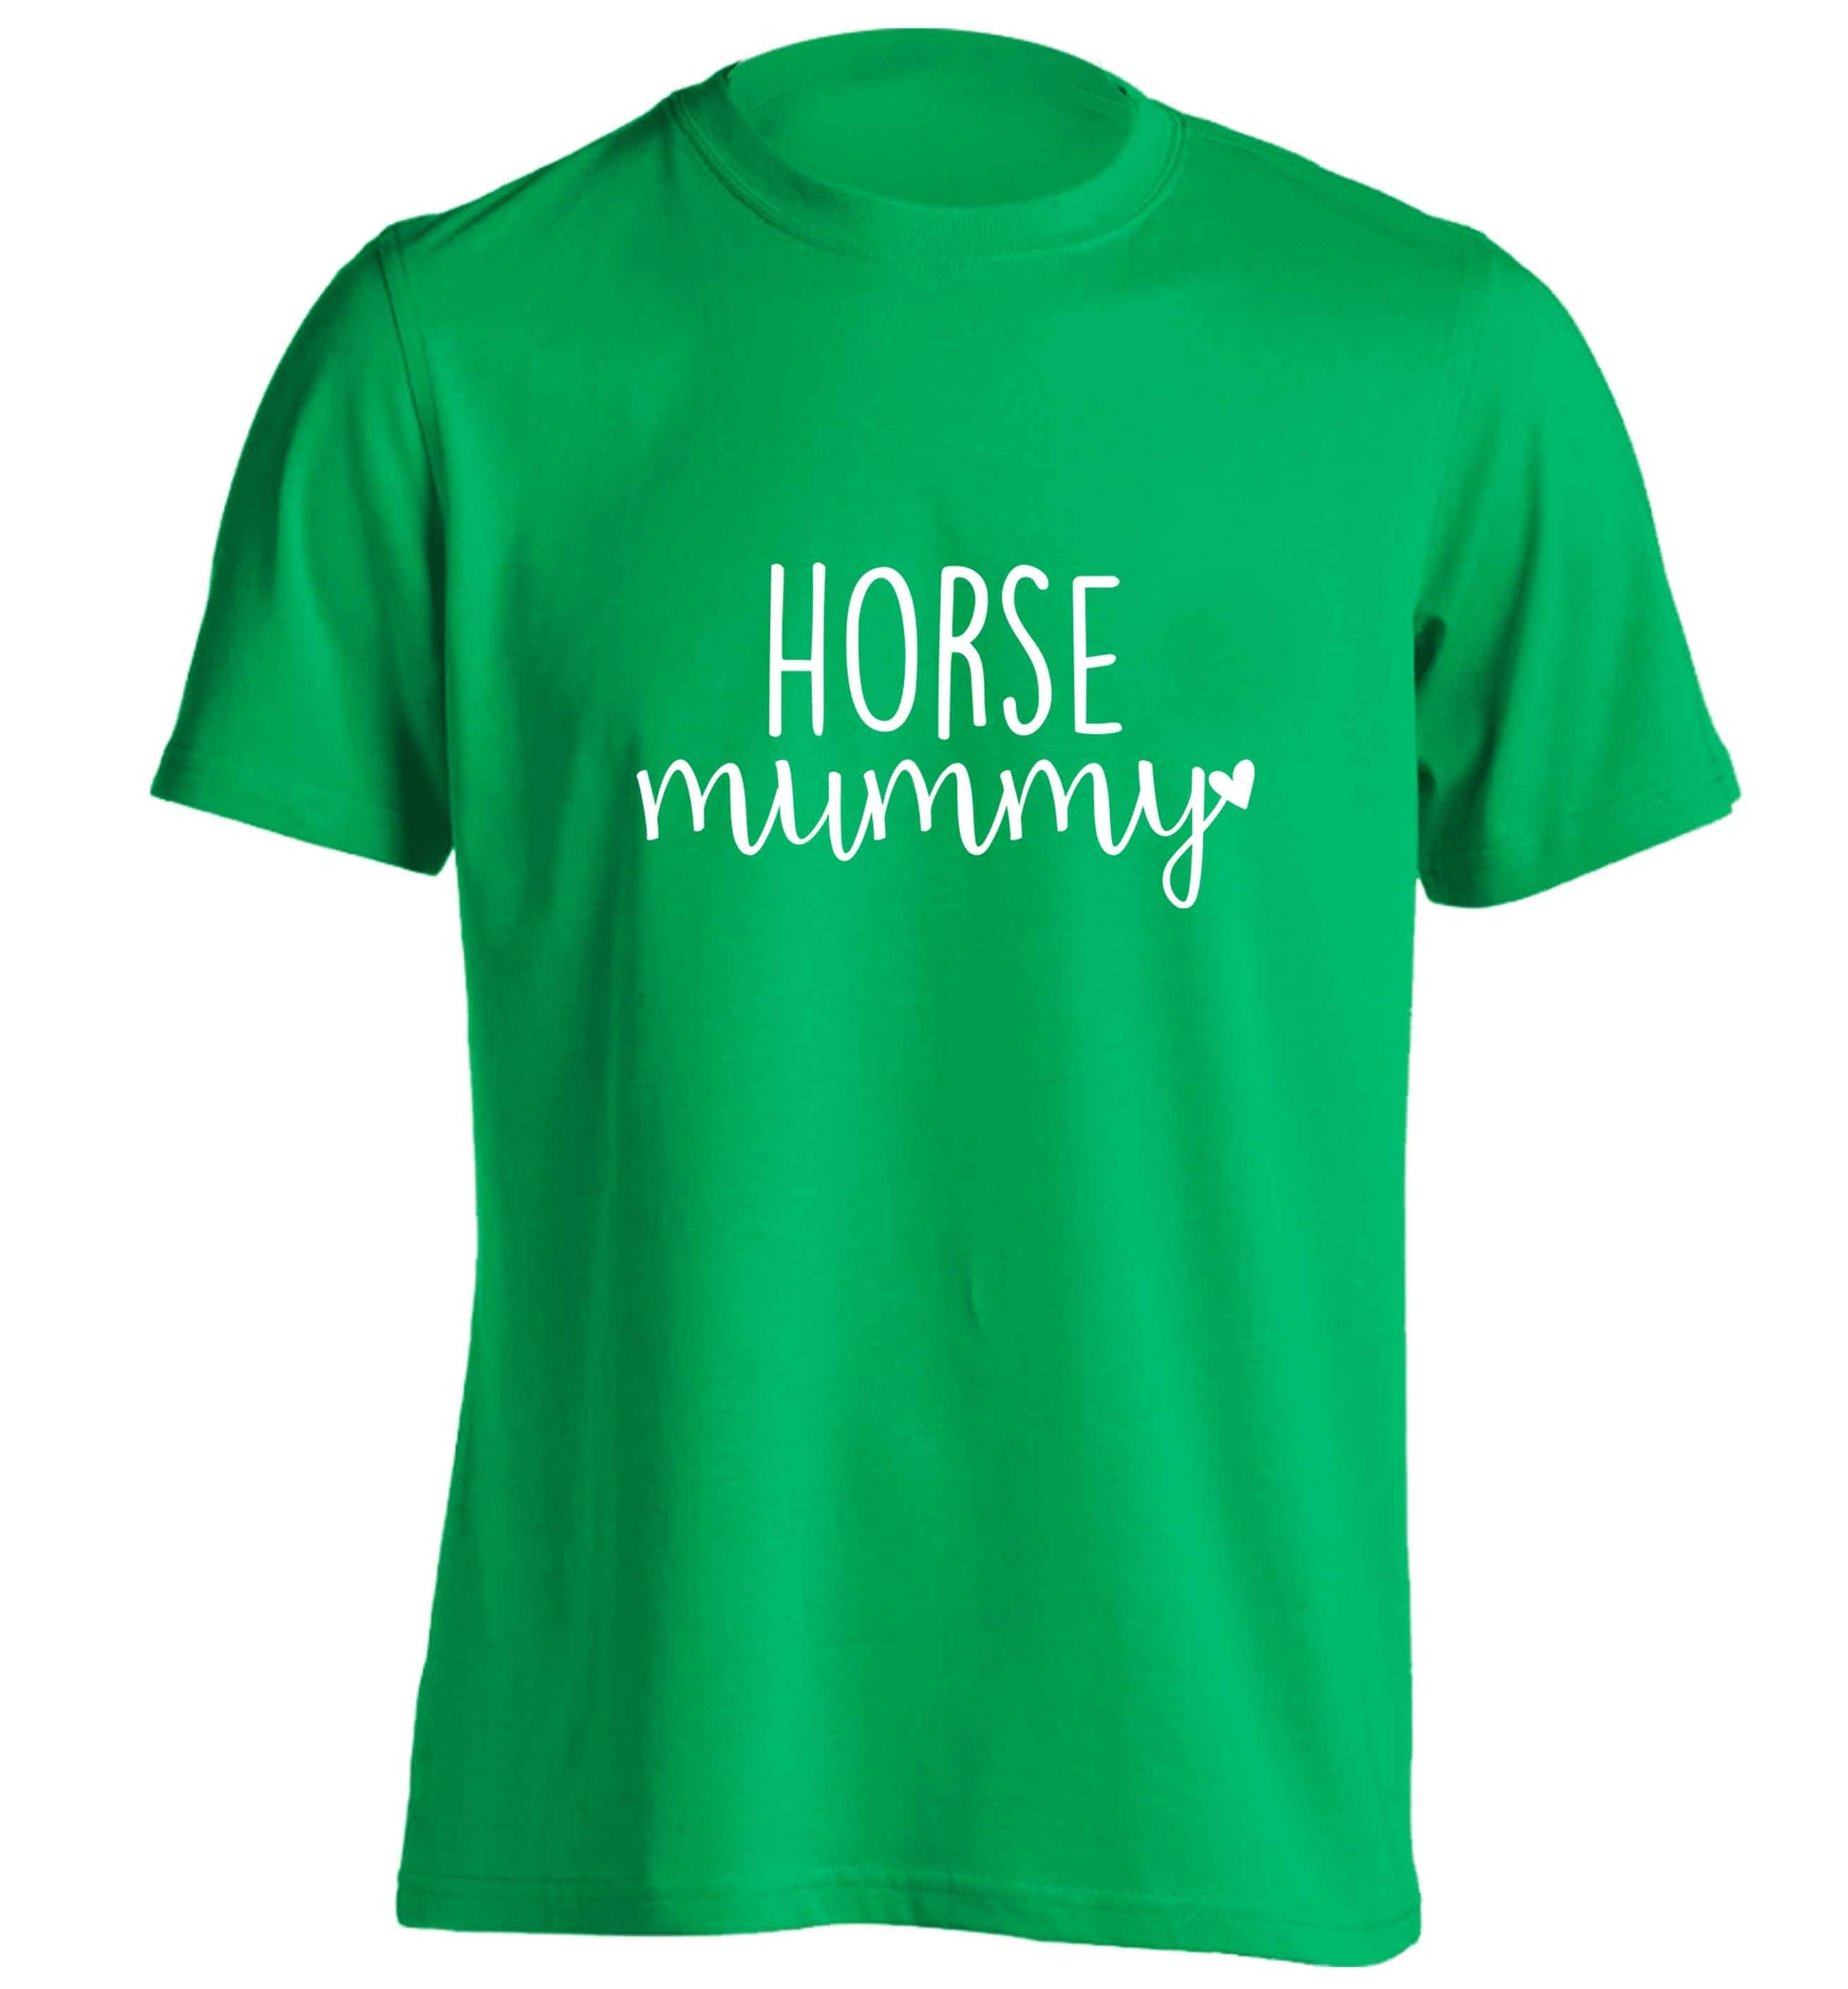 Horse mummy adults unisex green Tshirt 2XL